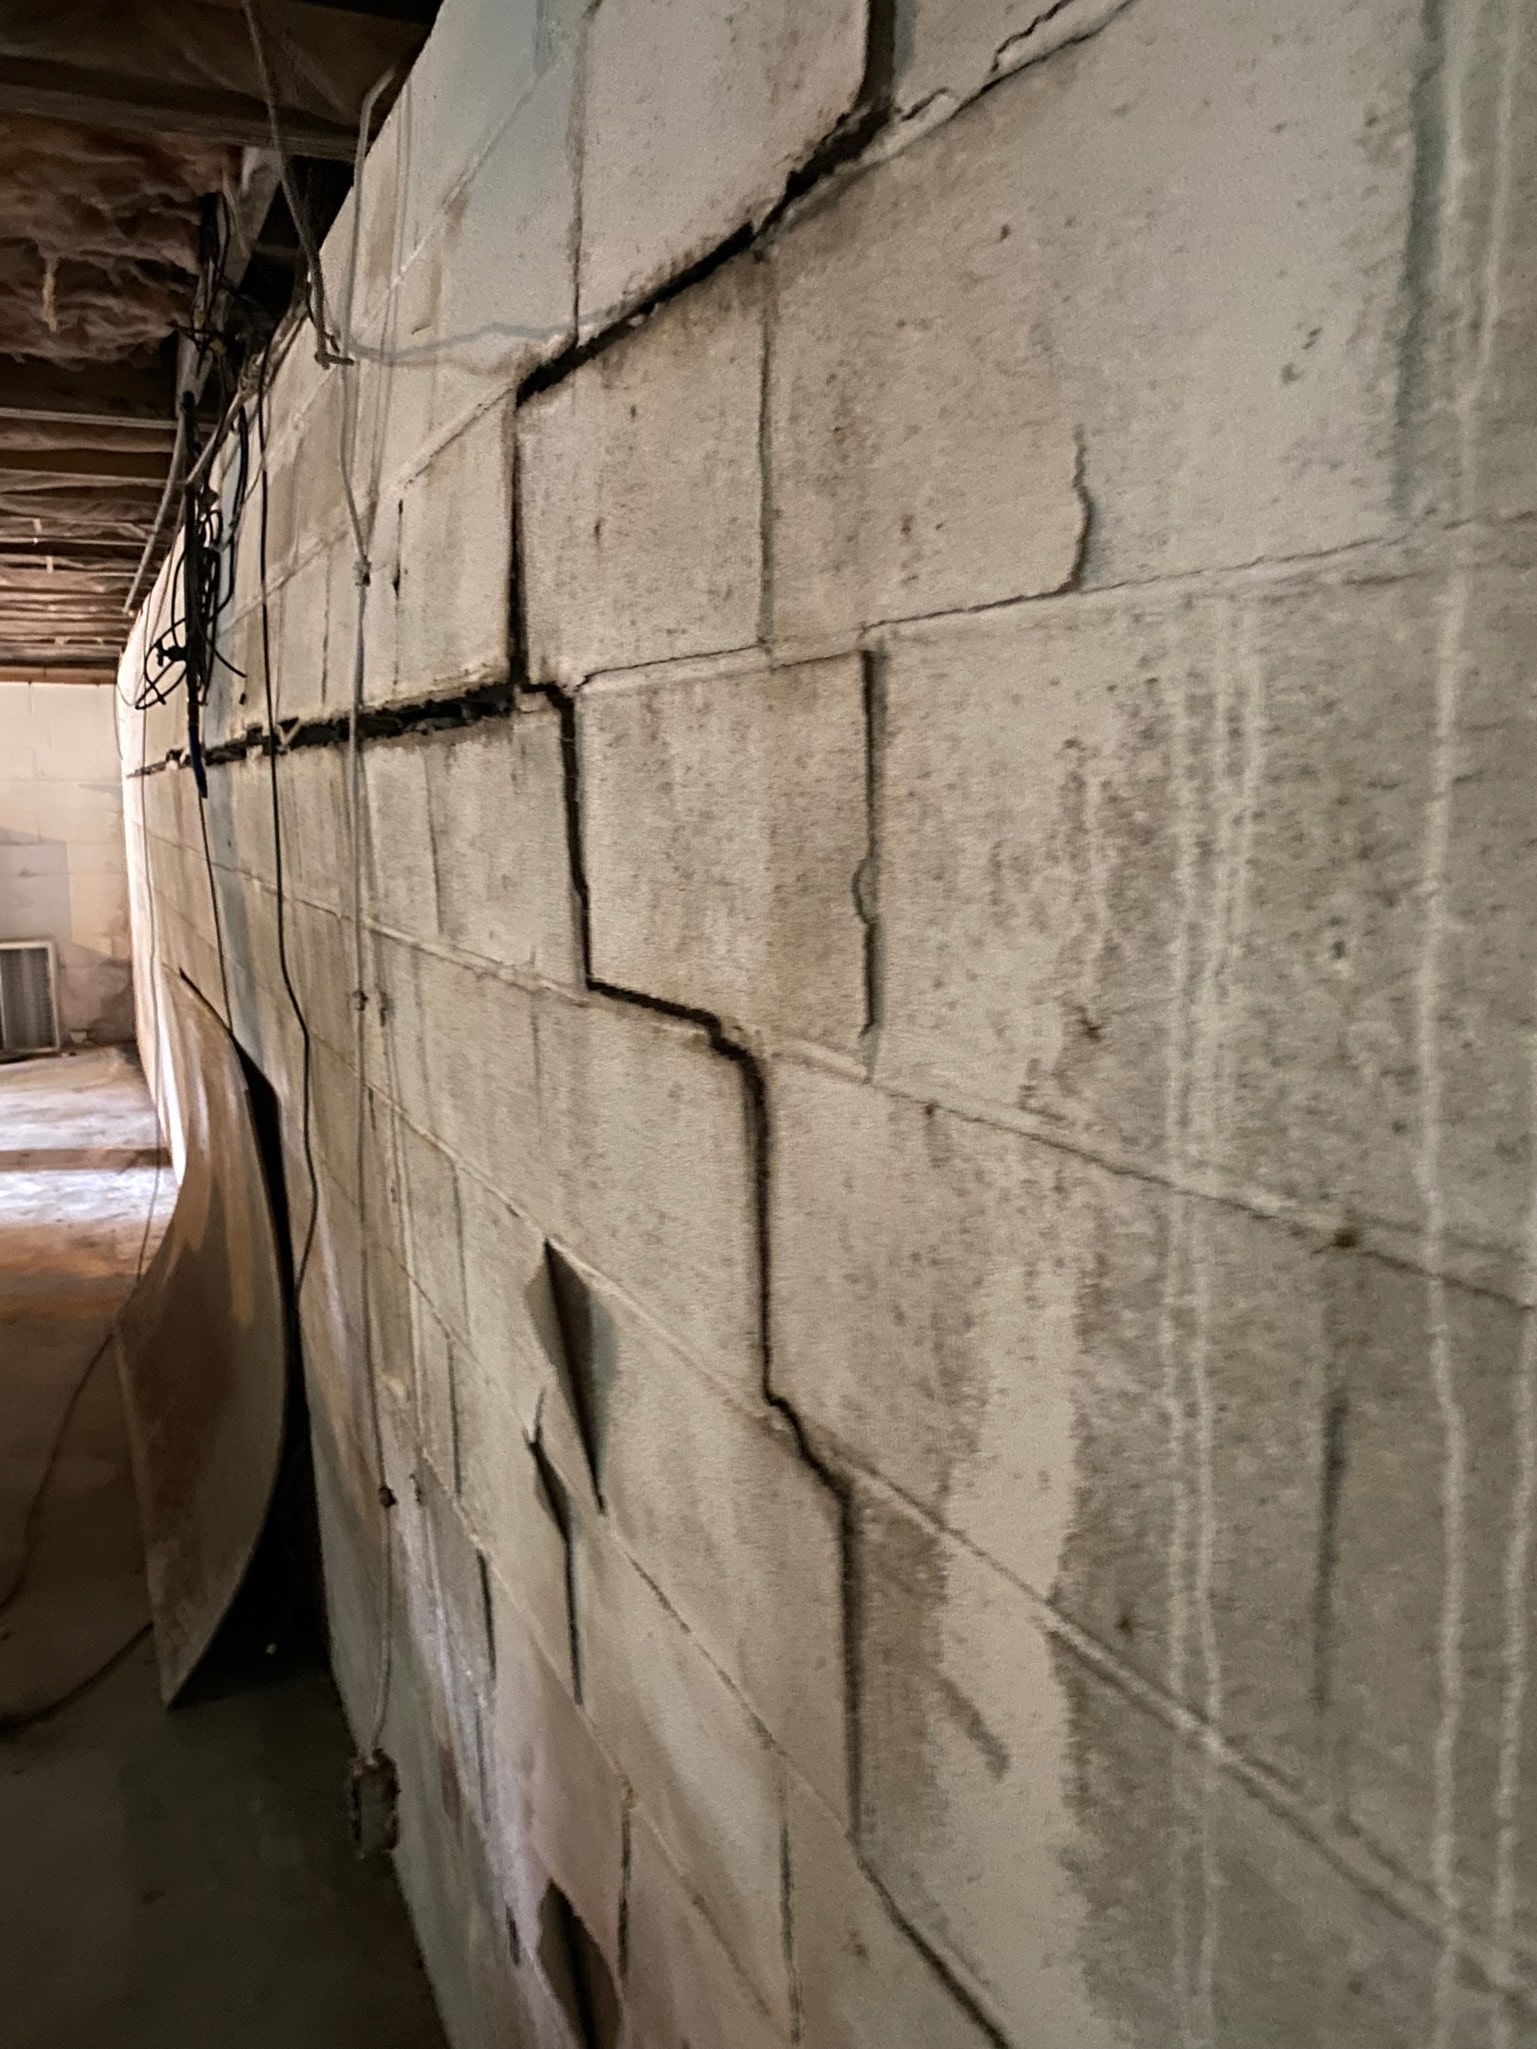 Bowed-basement-walls